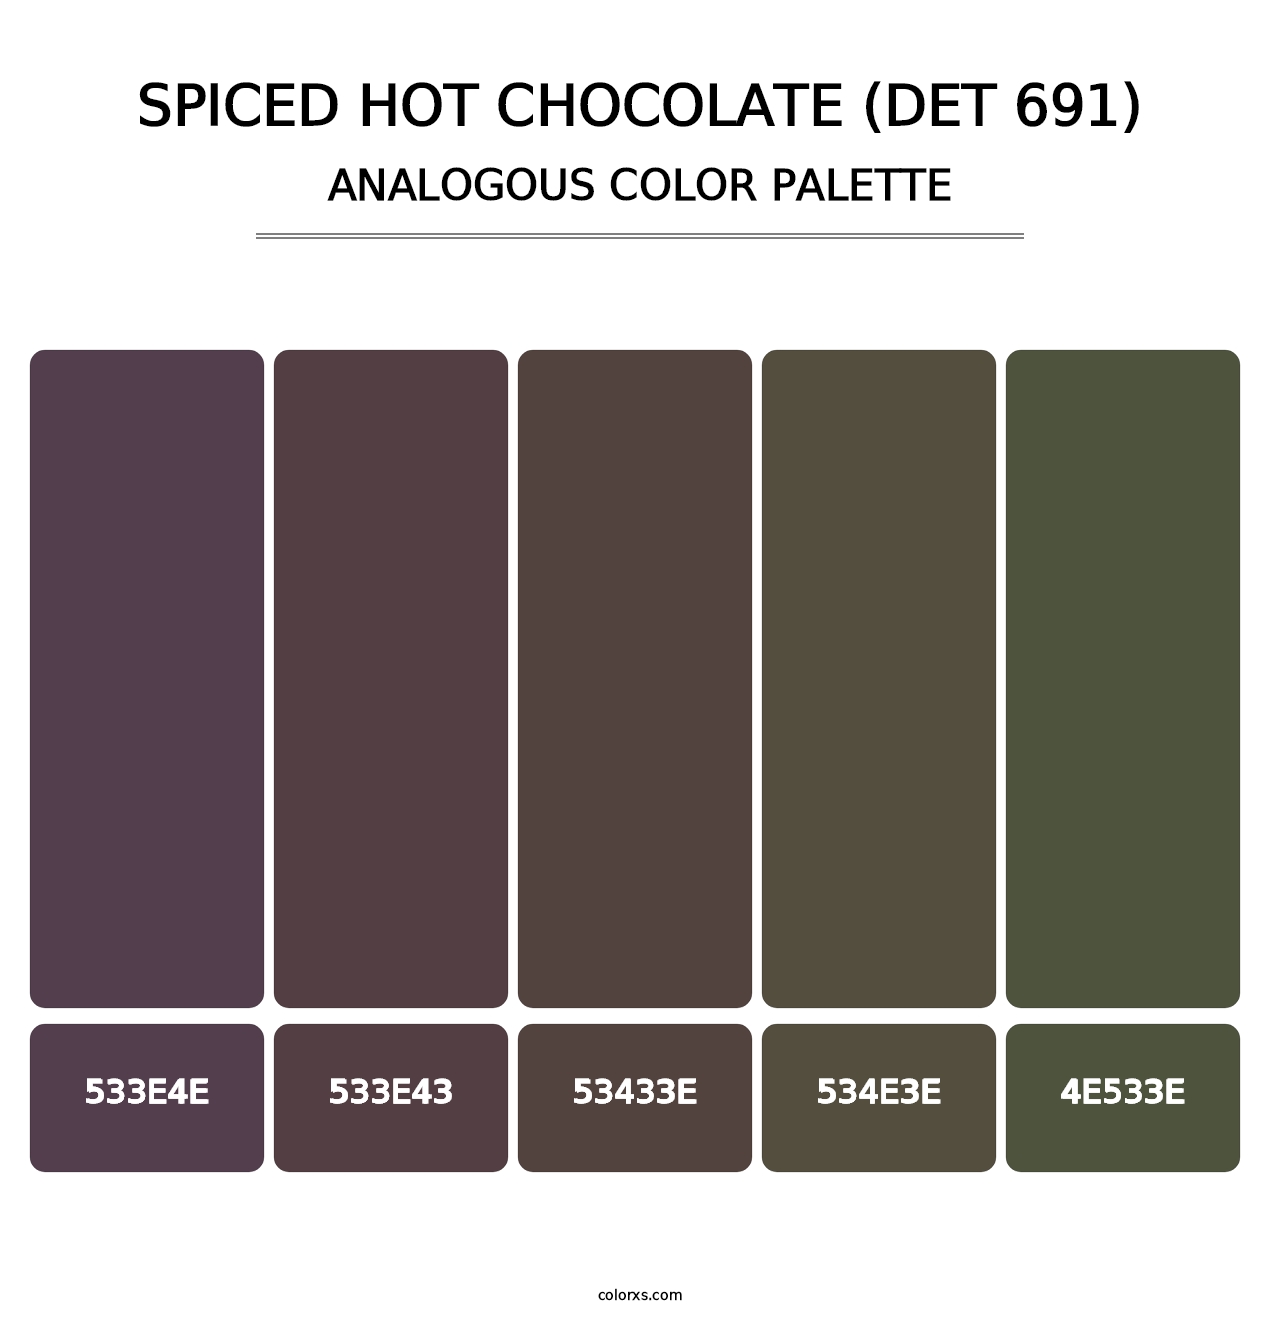 Spiced Hot Chocolate (DET 691) - Analogous Color Palette